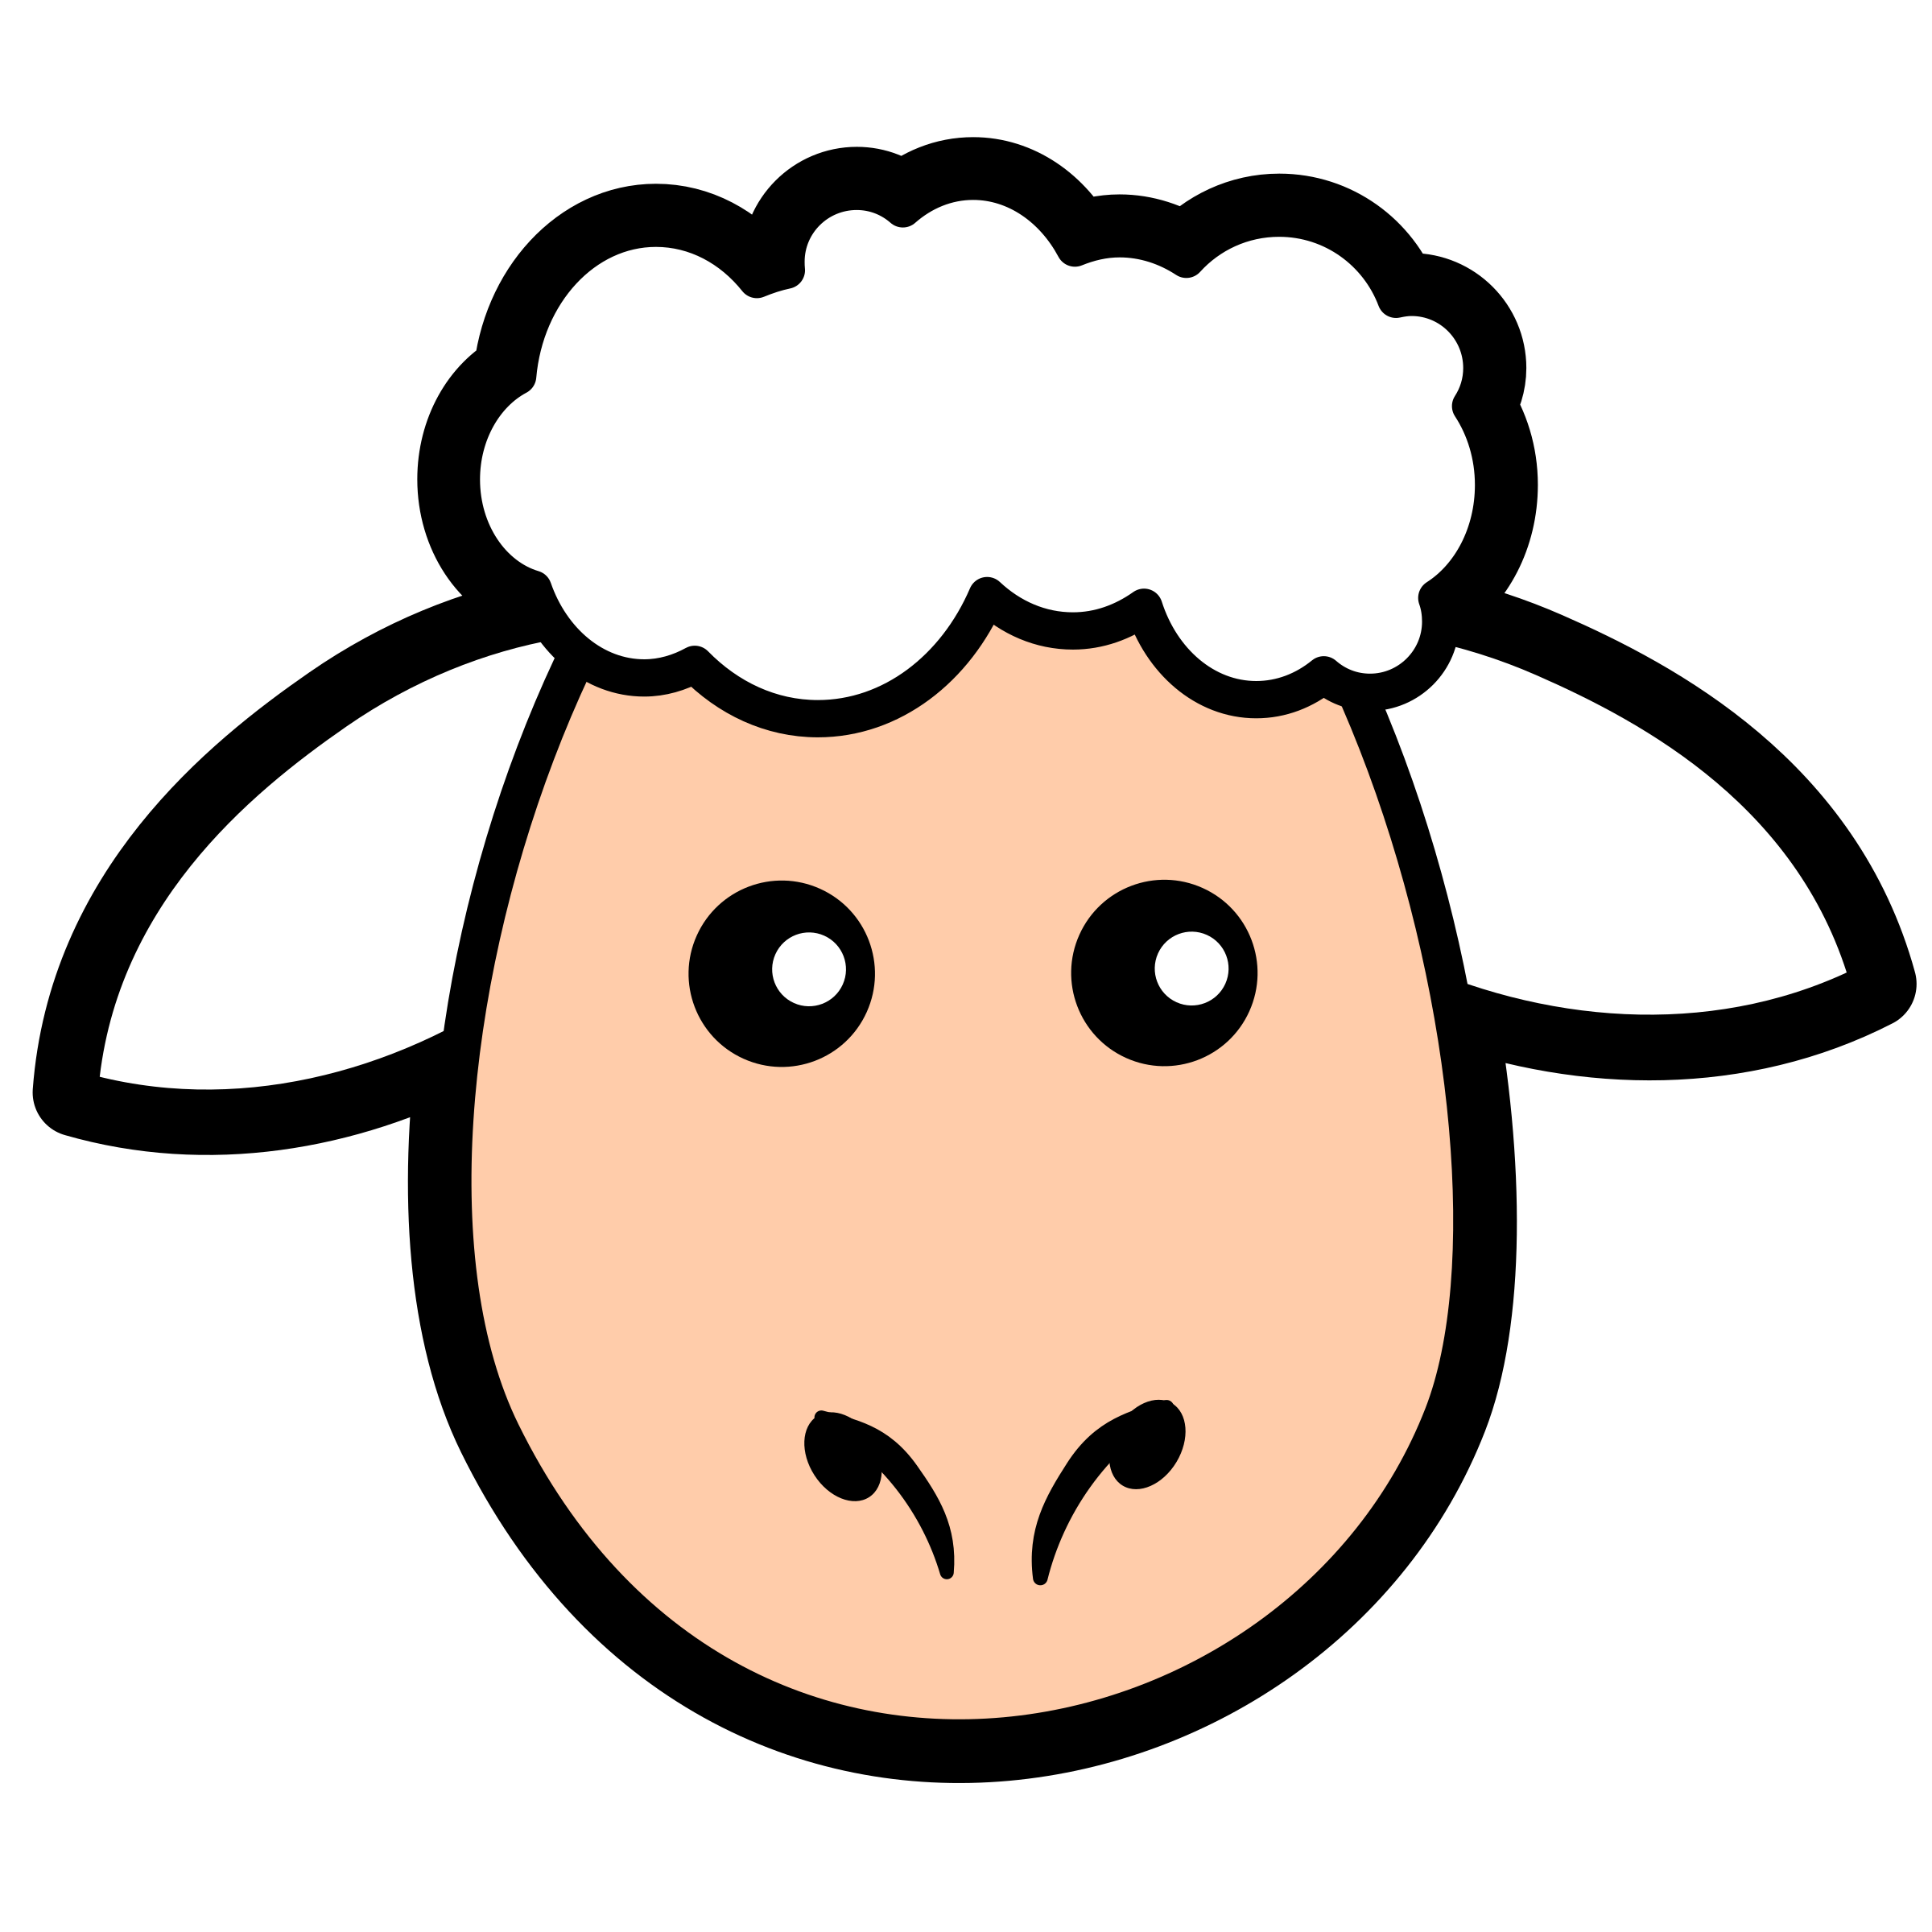 Sheep icon big image. Meteor clipart clip art